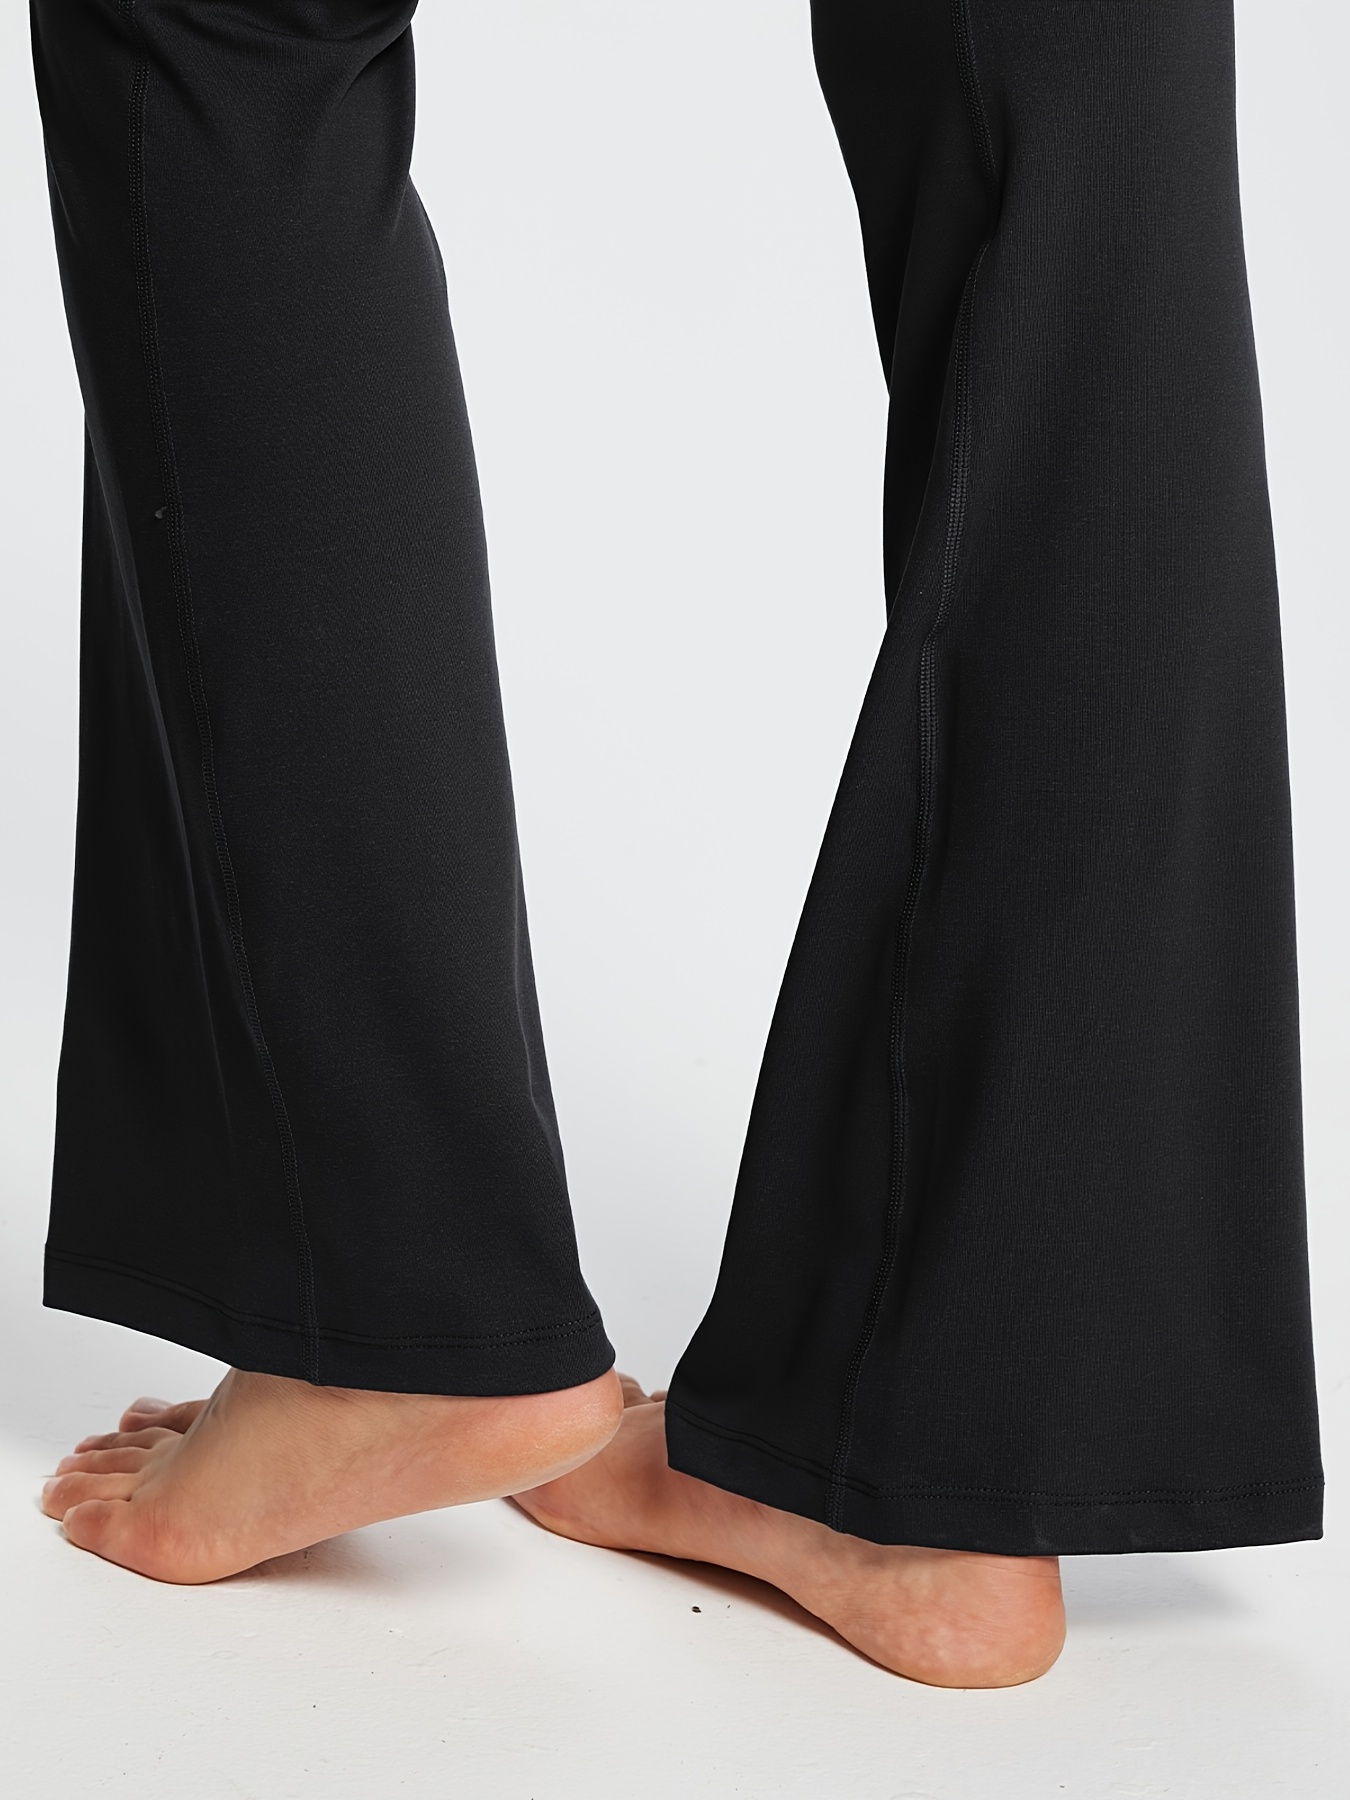 BALEAF Flare Leggings for Women Bootcut Yoga Pants Crossover High